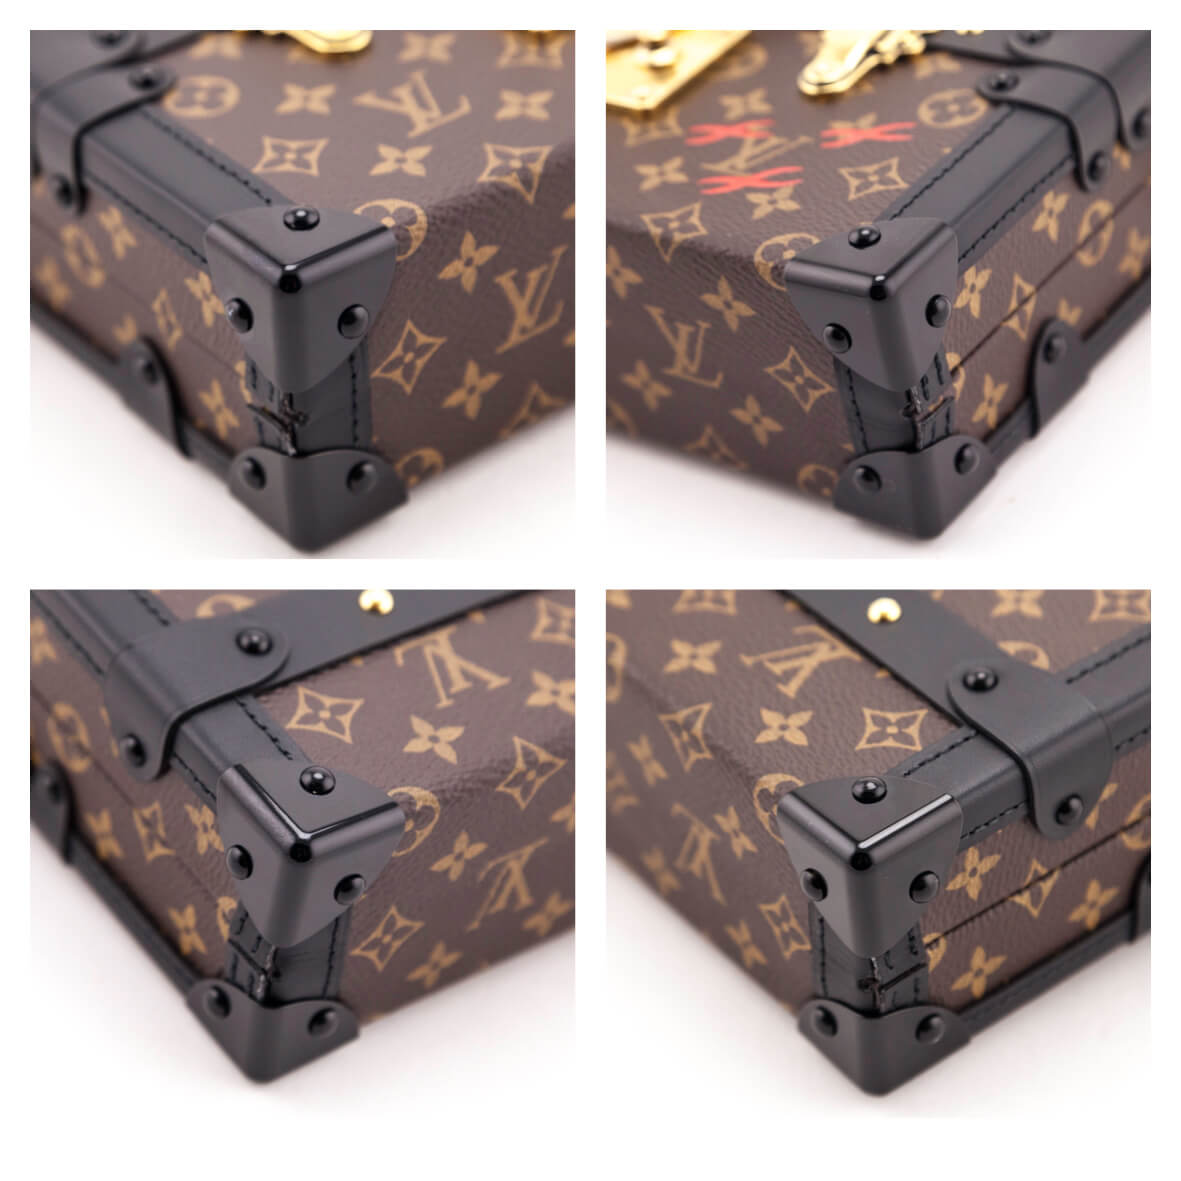 Treasure Chest: Shop the Petite Malle now at www.Bagista.co.uk  #LouisVuitton #PetiteMalle #Monogram #LV #Fashion #Handbags #Bagista…